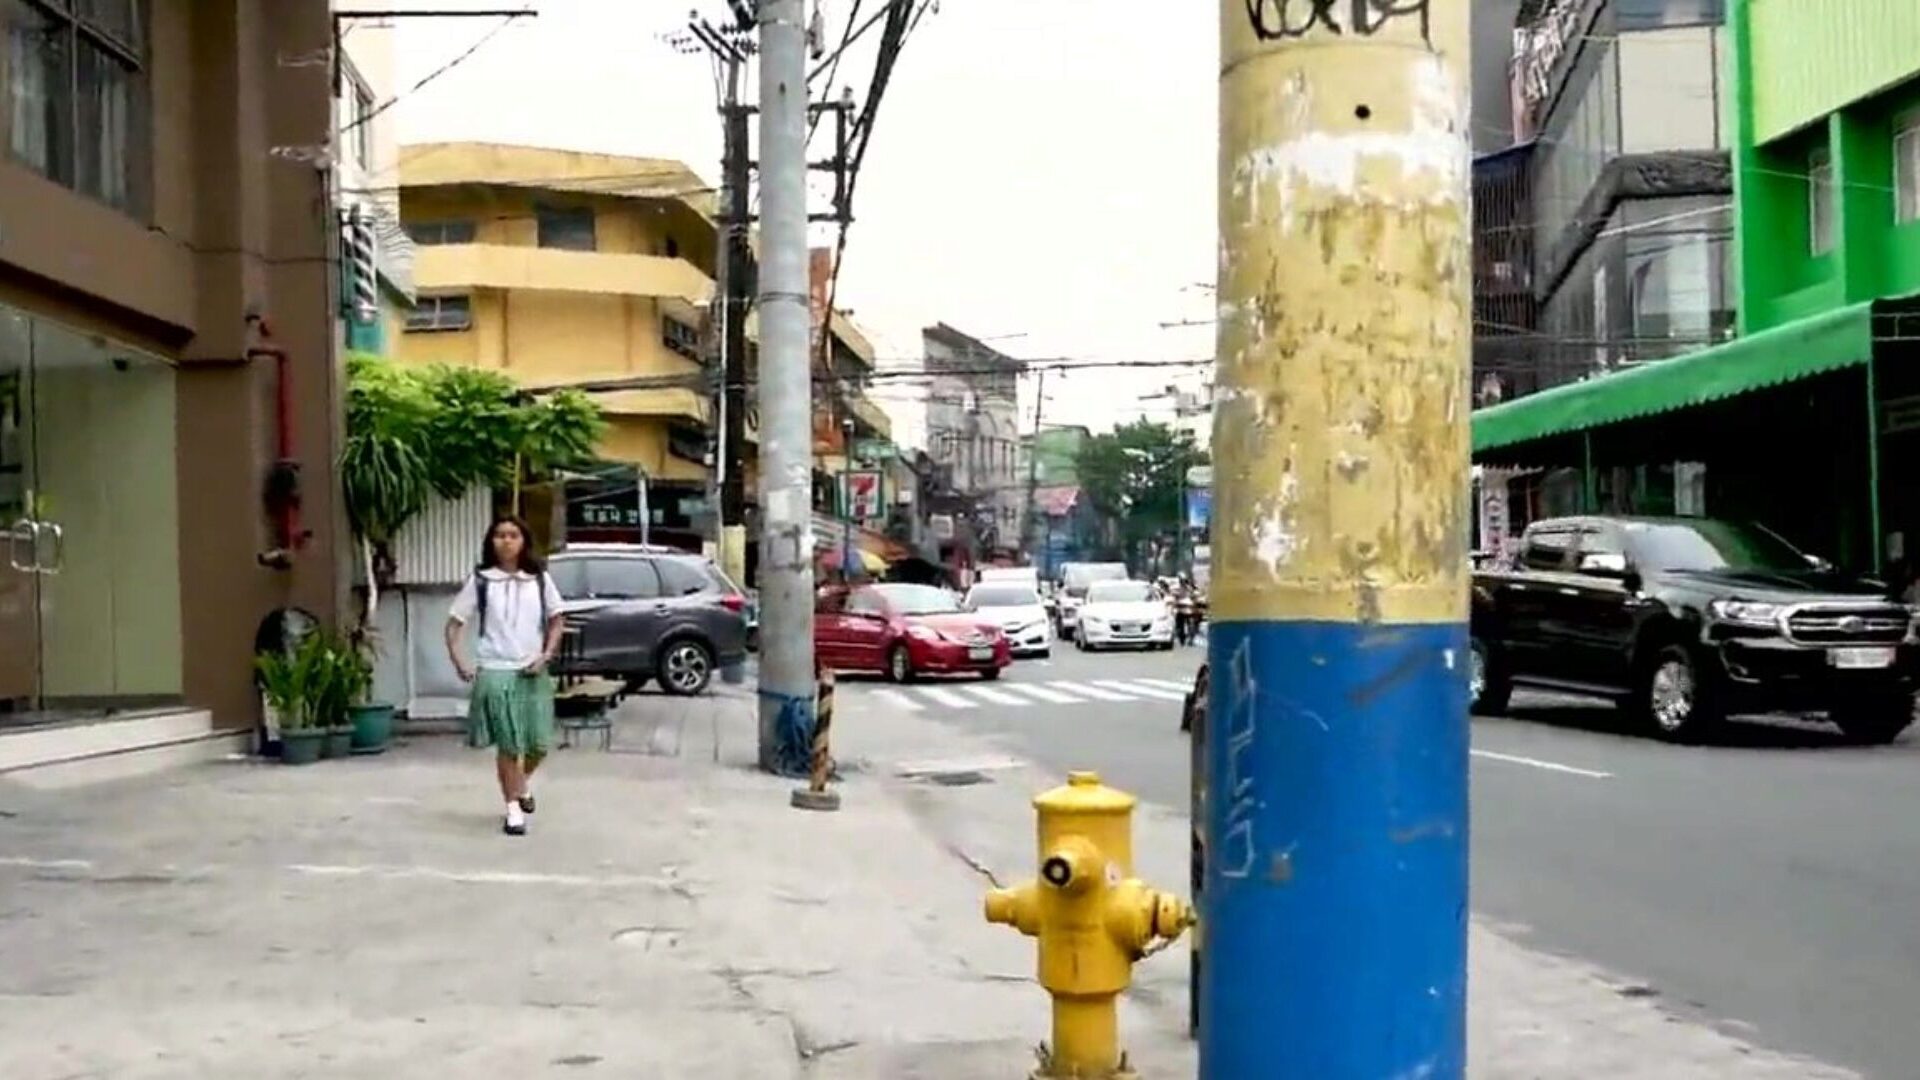 White stude impregnates Filipina teen ، hd porn 59: xhamster watch white stude impregnates Filipina teen movie scene on xhamster ، أفضل موقع ويب أنبوب عالي الدقة لصناعة الحب مع أطنان من المراهقين مجانًا لأفلام إباحية مجانية في سن المراهقة و CREAMPIE